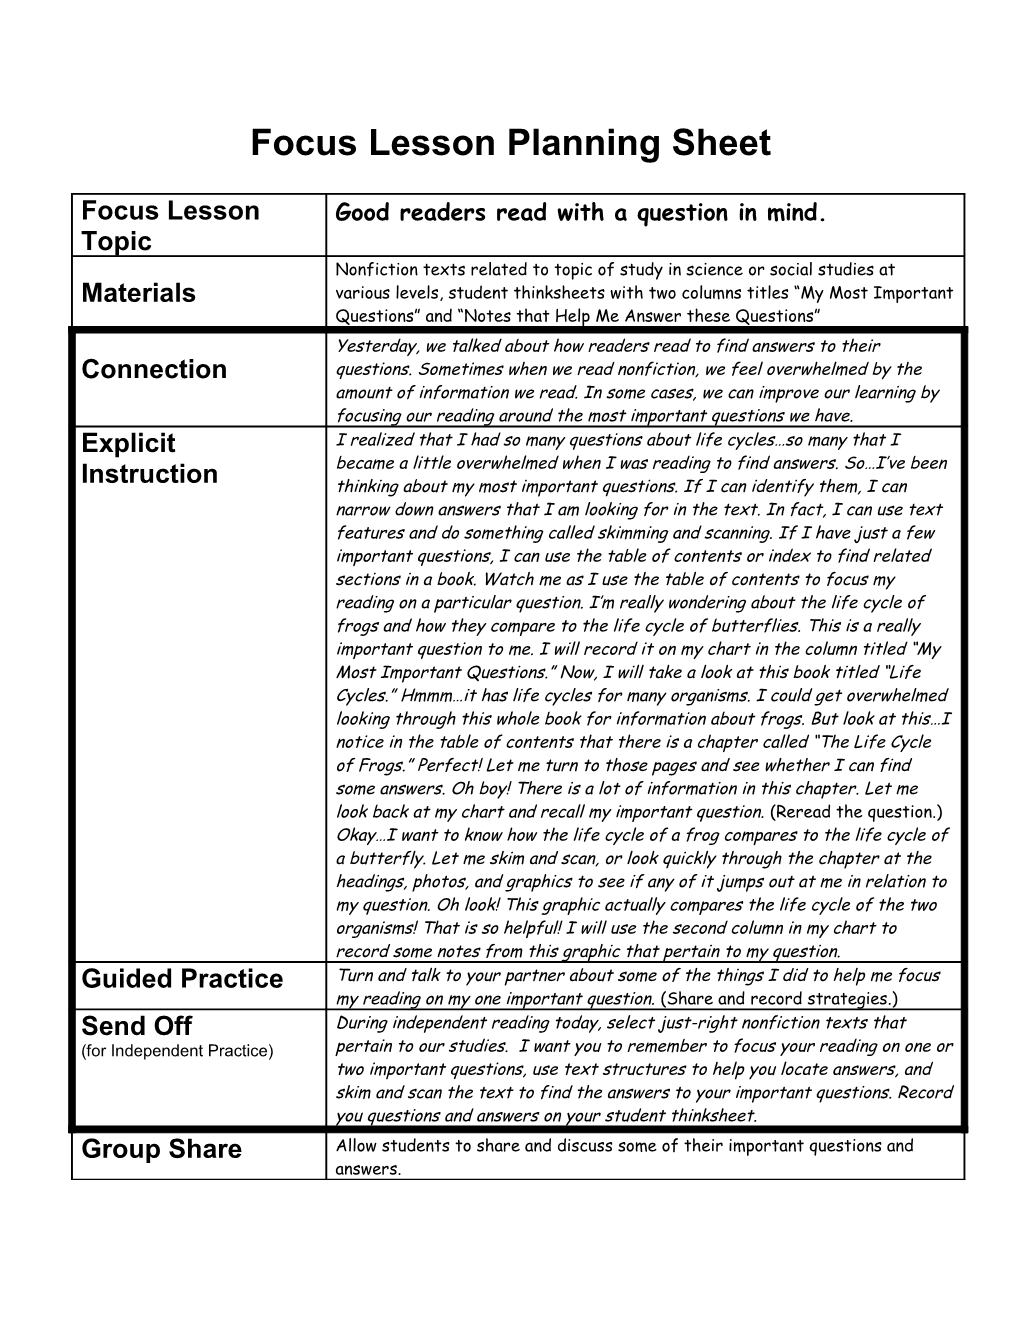 Focus Lesson Planning Sheet s9